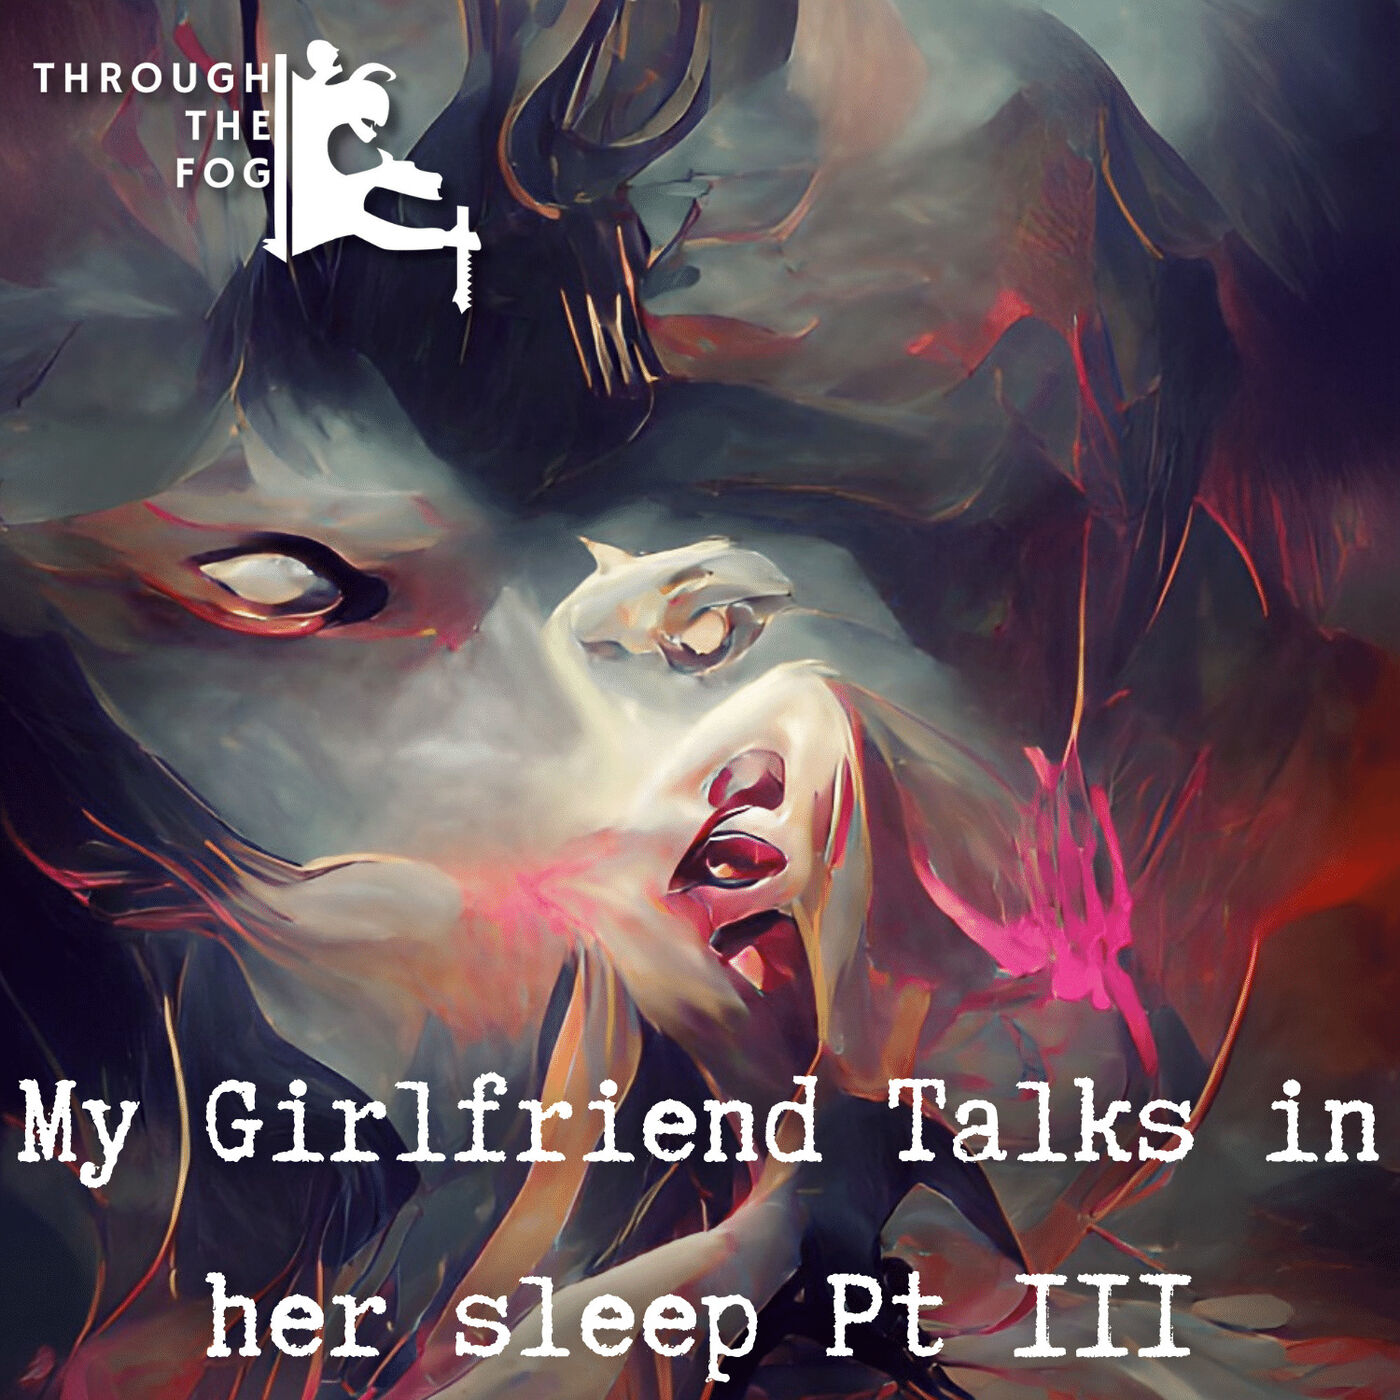 My Girlfriend Talks in her sleep (pt 3)